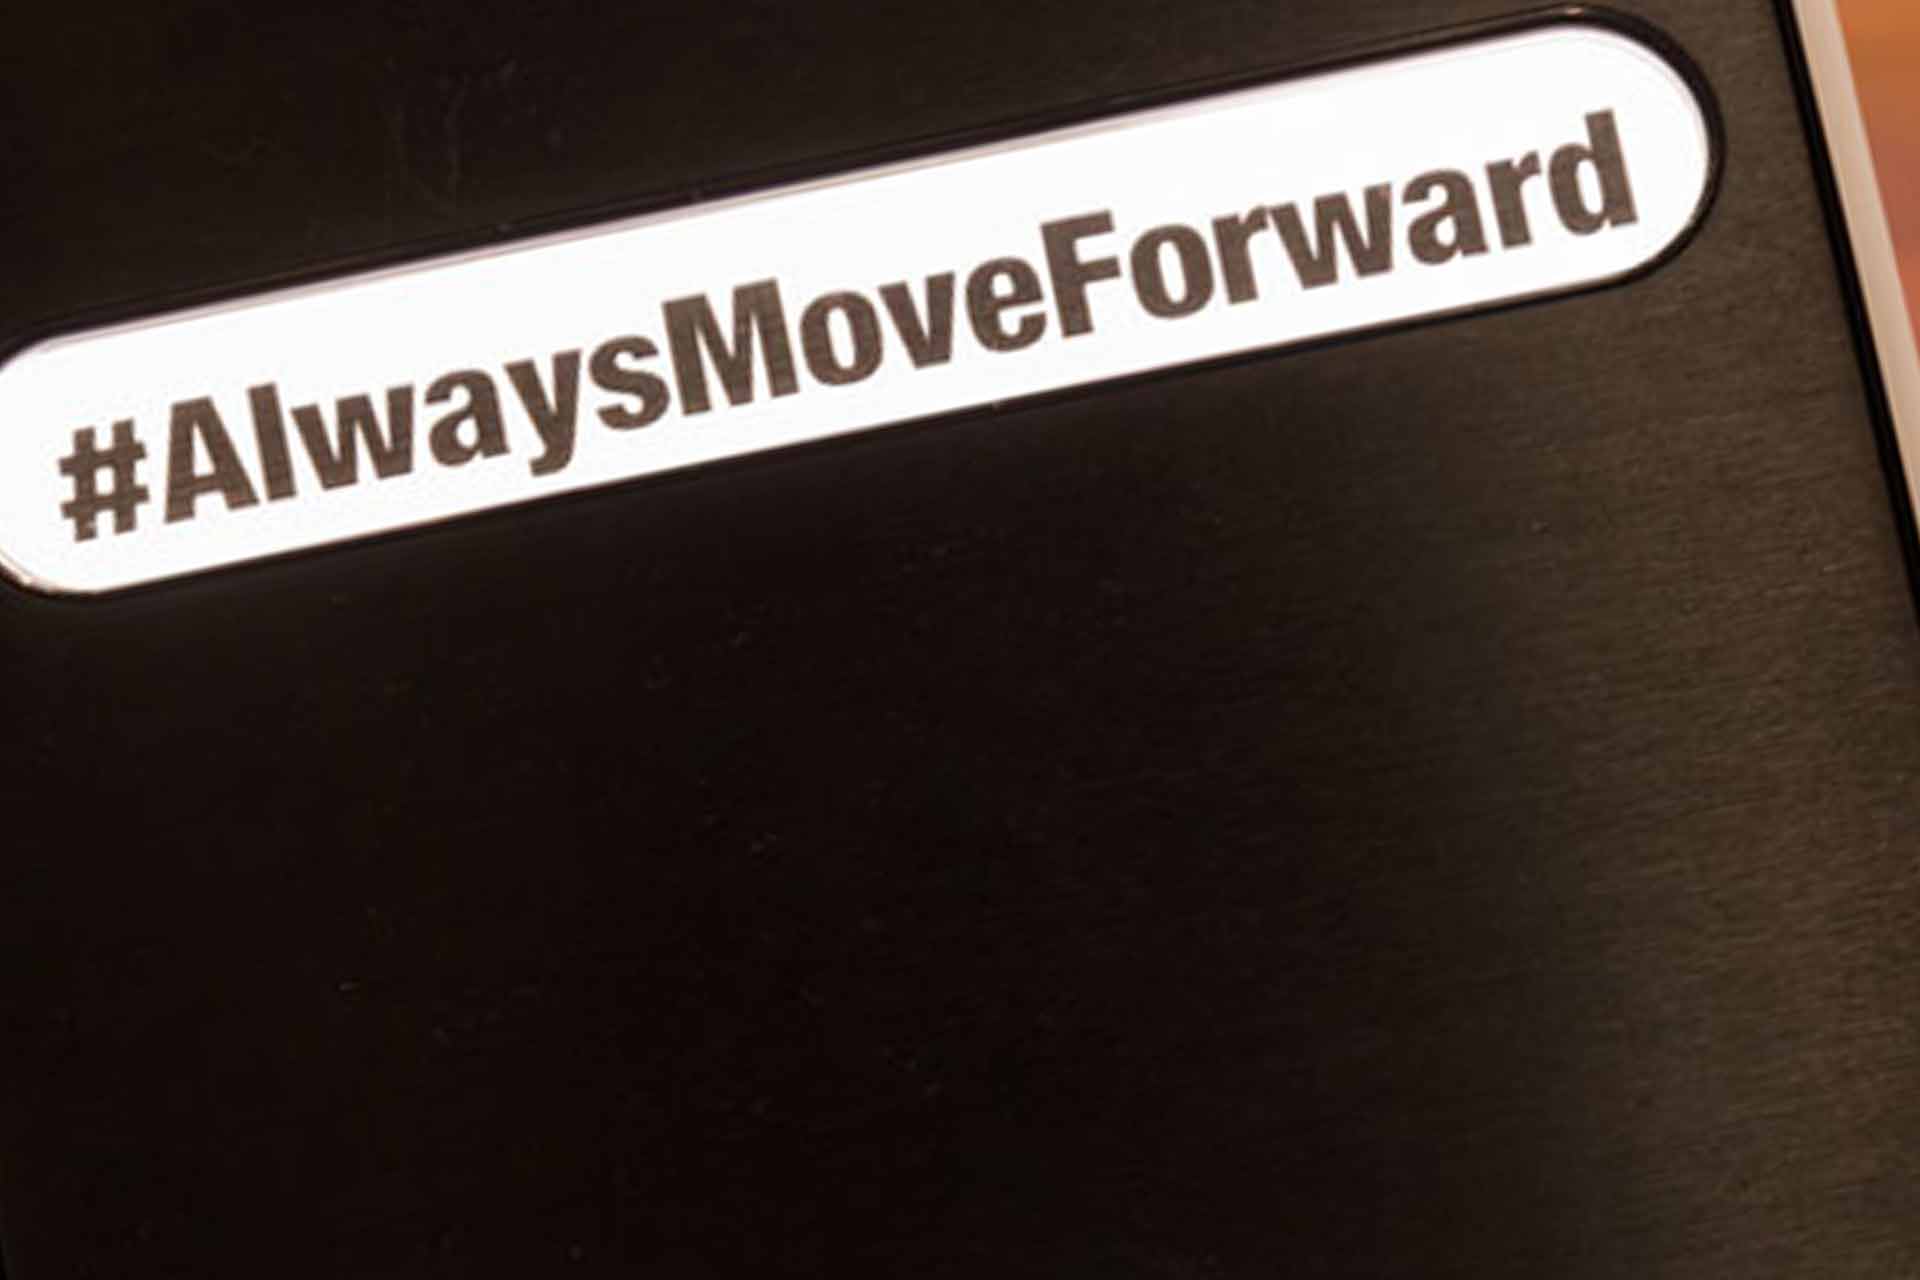 always-move-forward